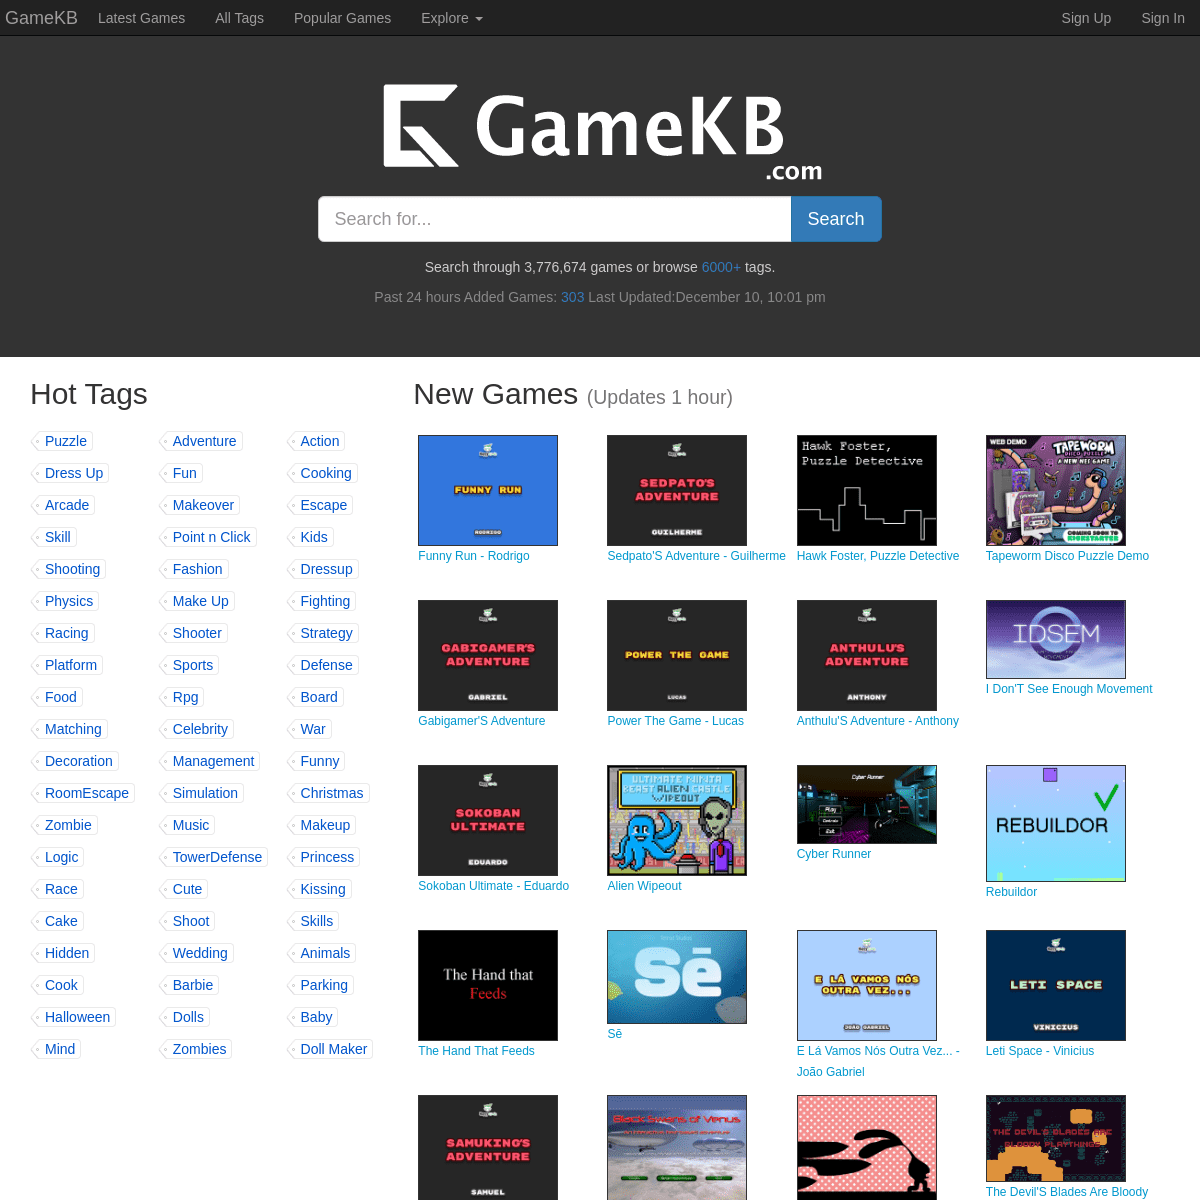 A complete backup of gamekb.com